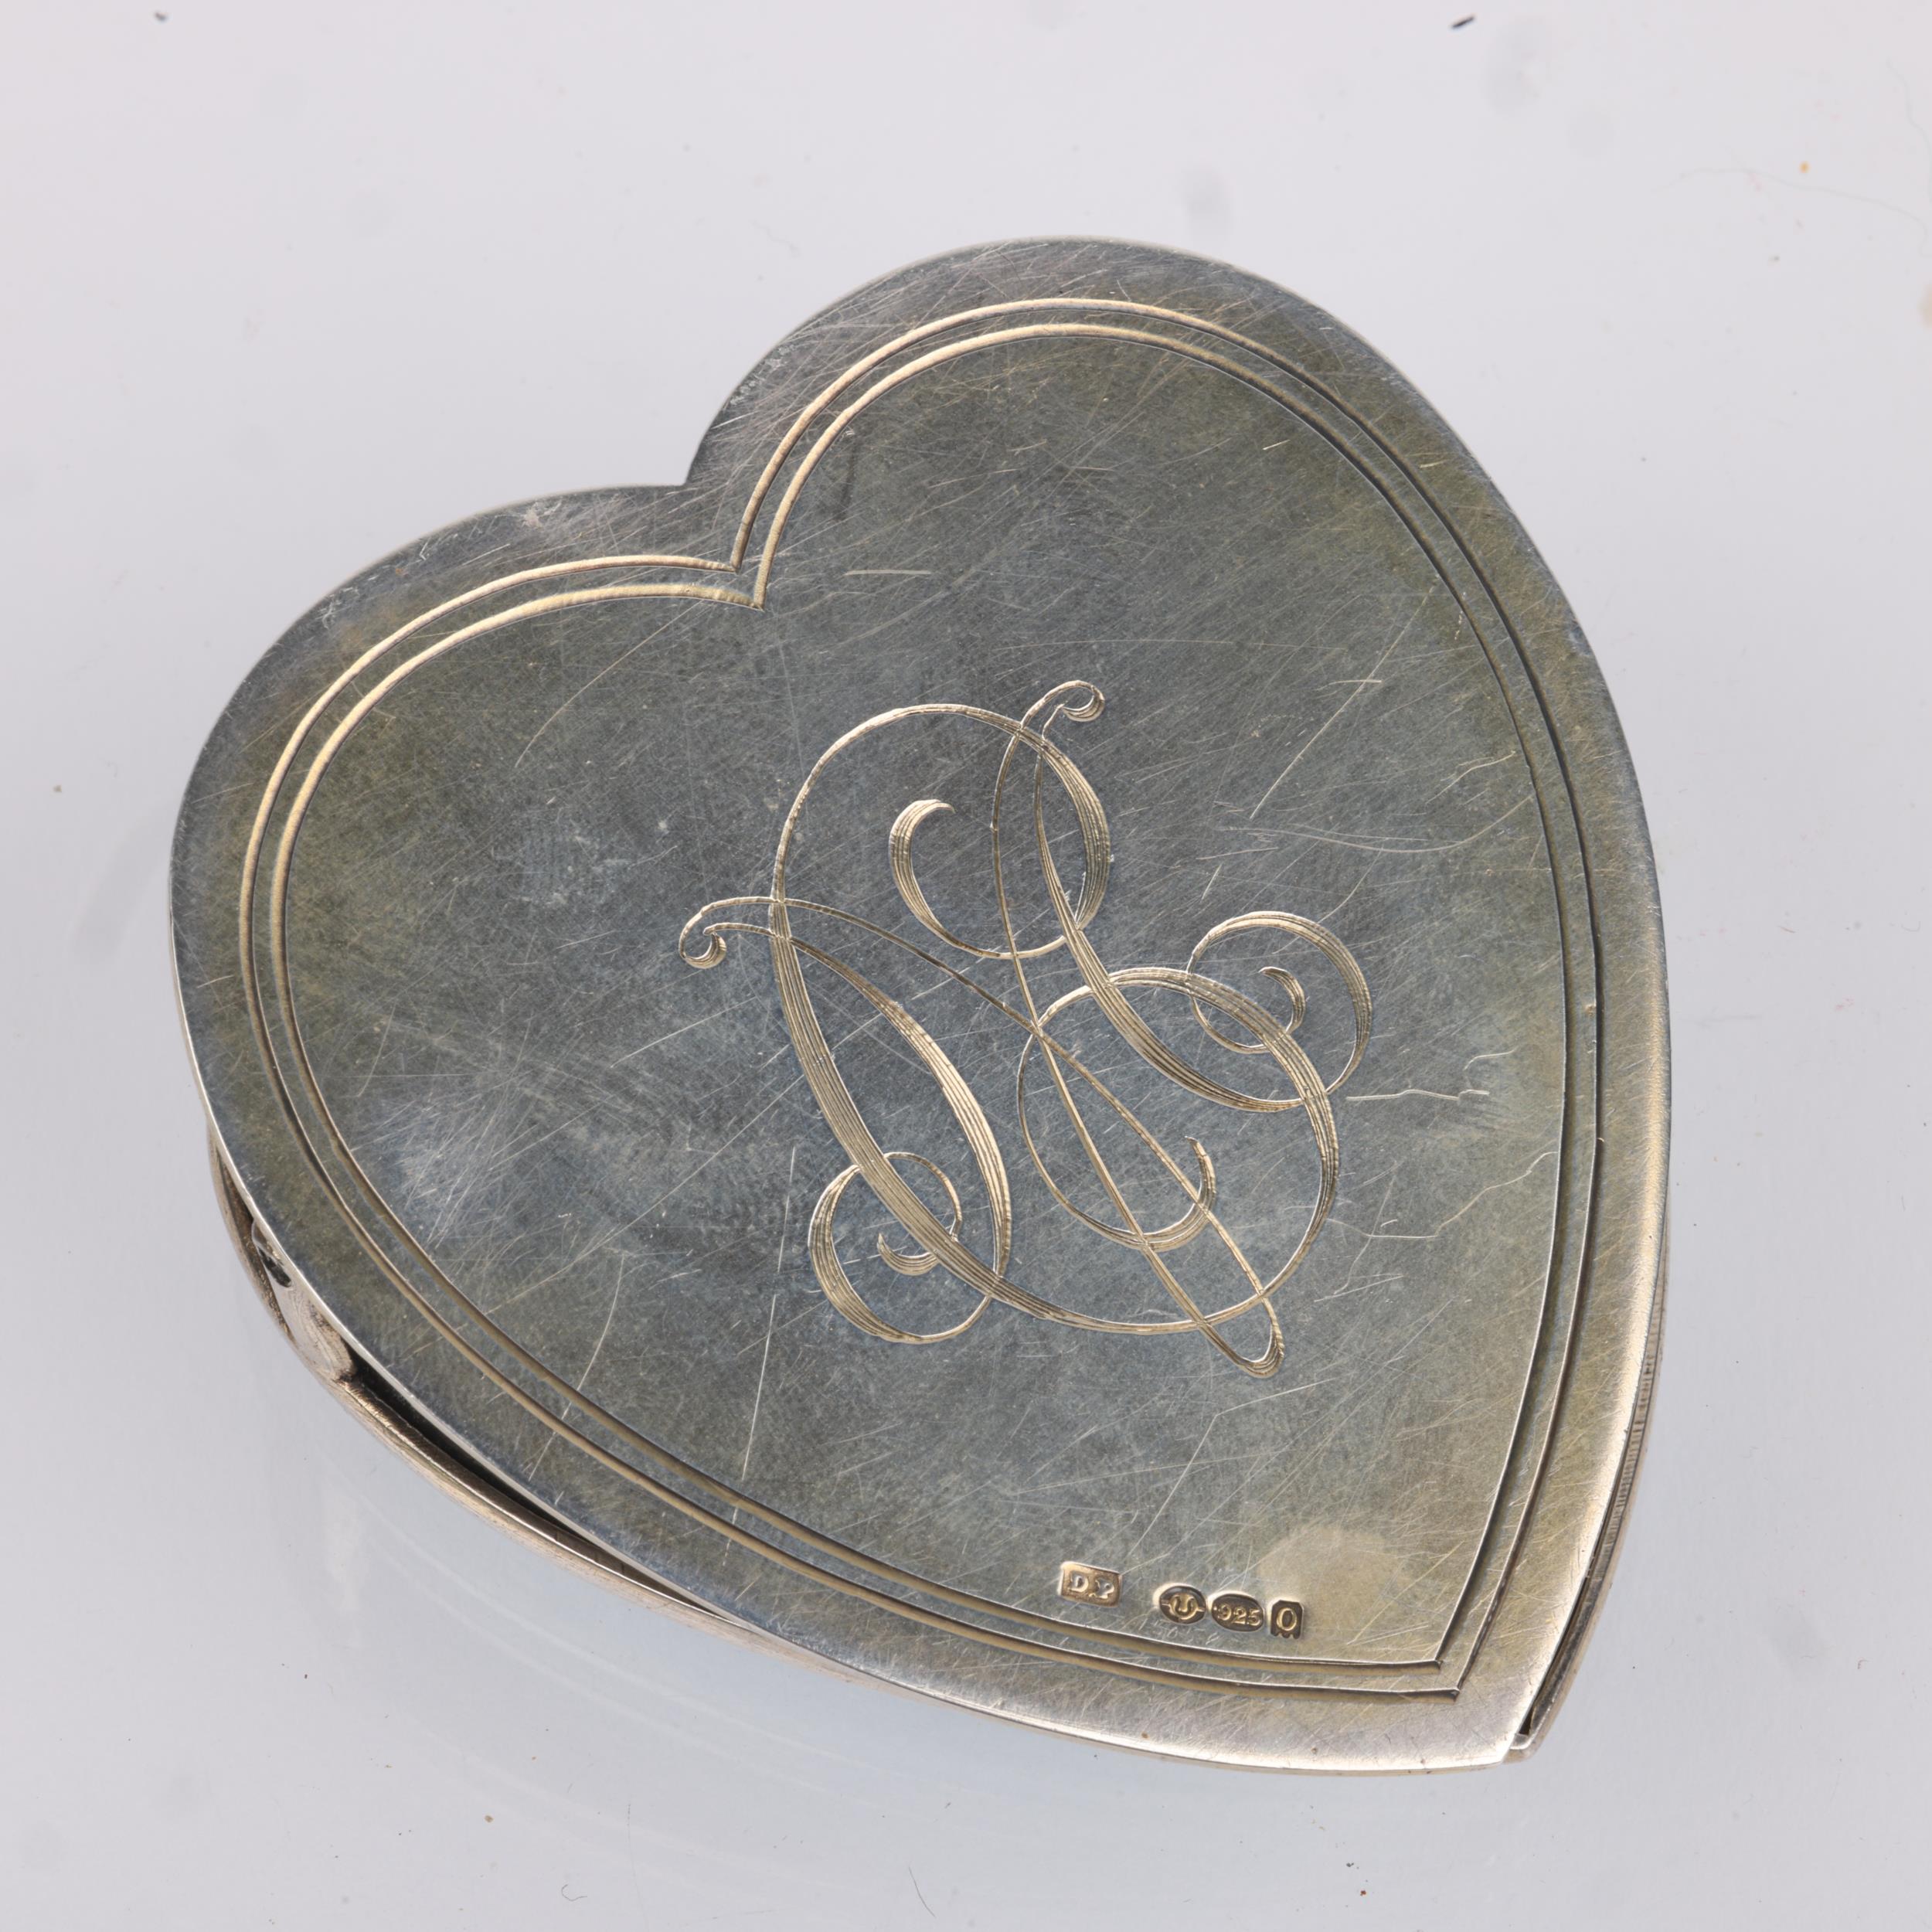 An Edwardian novelty silver and blue enamel heart desk paperclip, Desire Pennellier & Co, import - Image 2 of 3